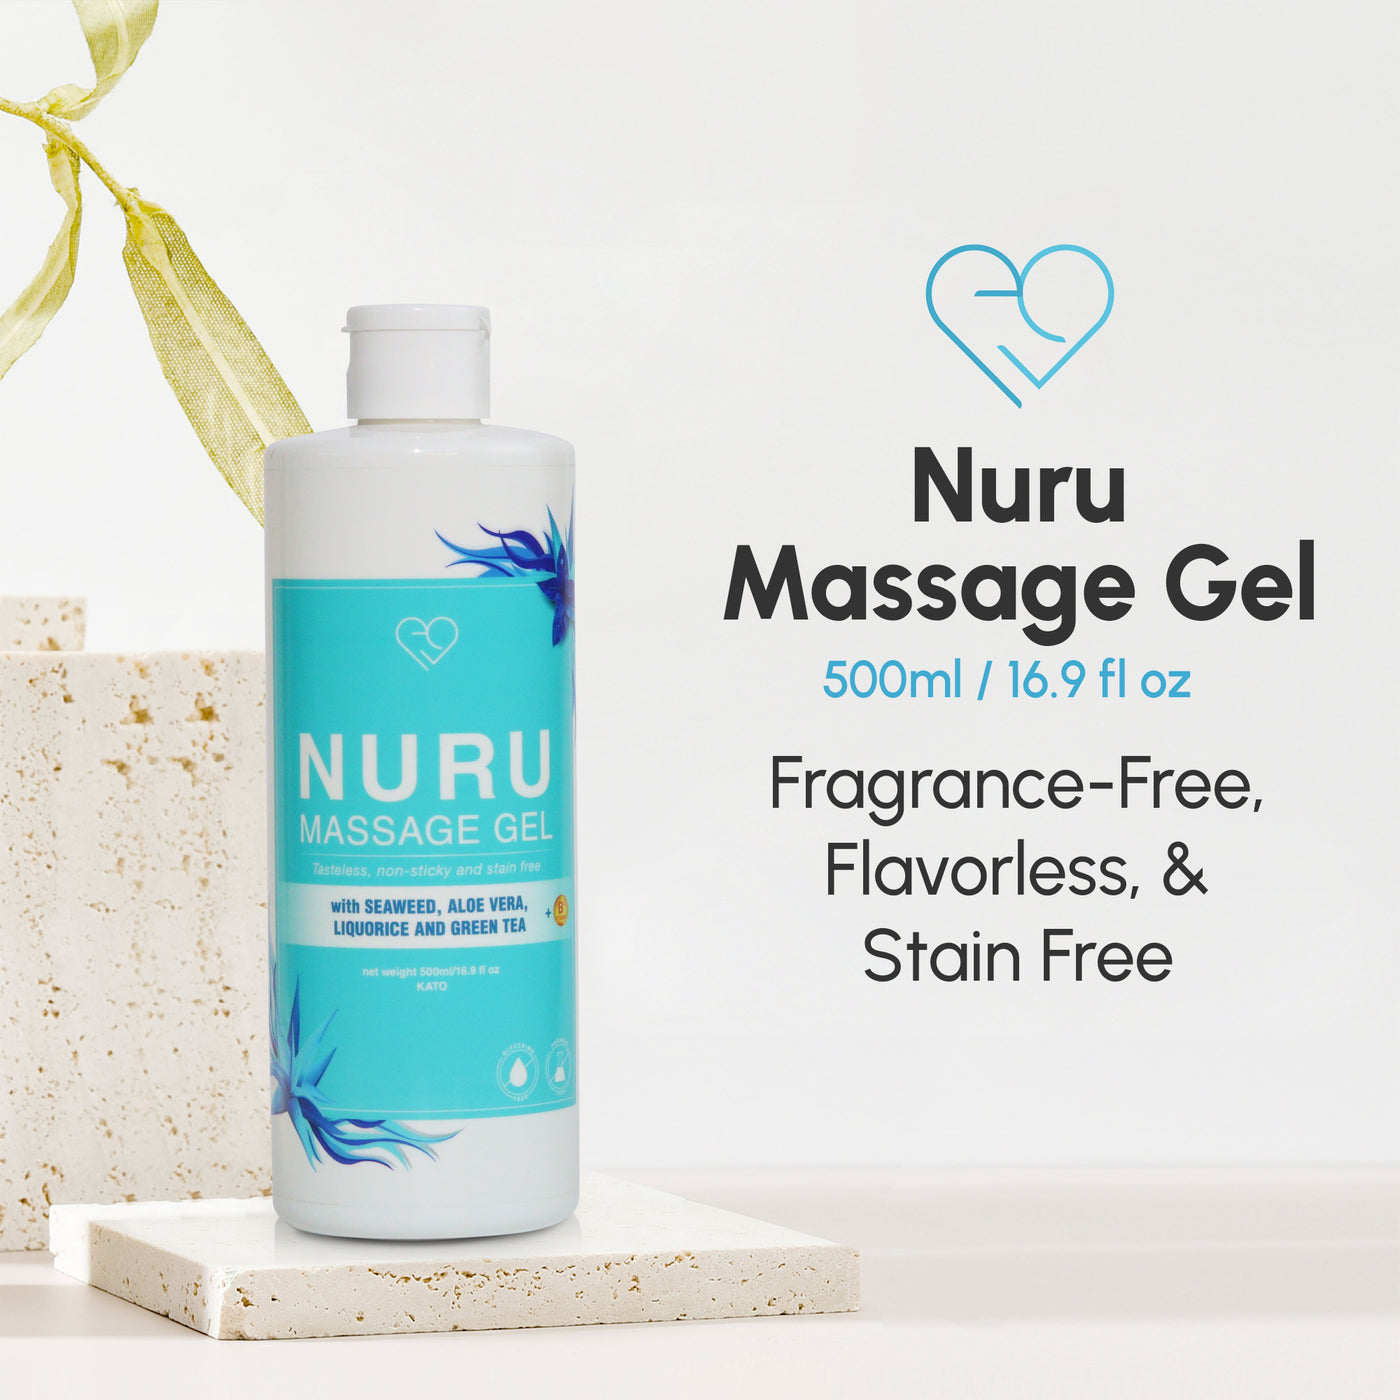 Eroticgel Nuru Massage Gel 500ml / 16.9 oz with Aloe Vera, Seaweed, Green Tea, Liquorice, and Vitamin B5